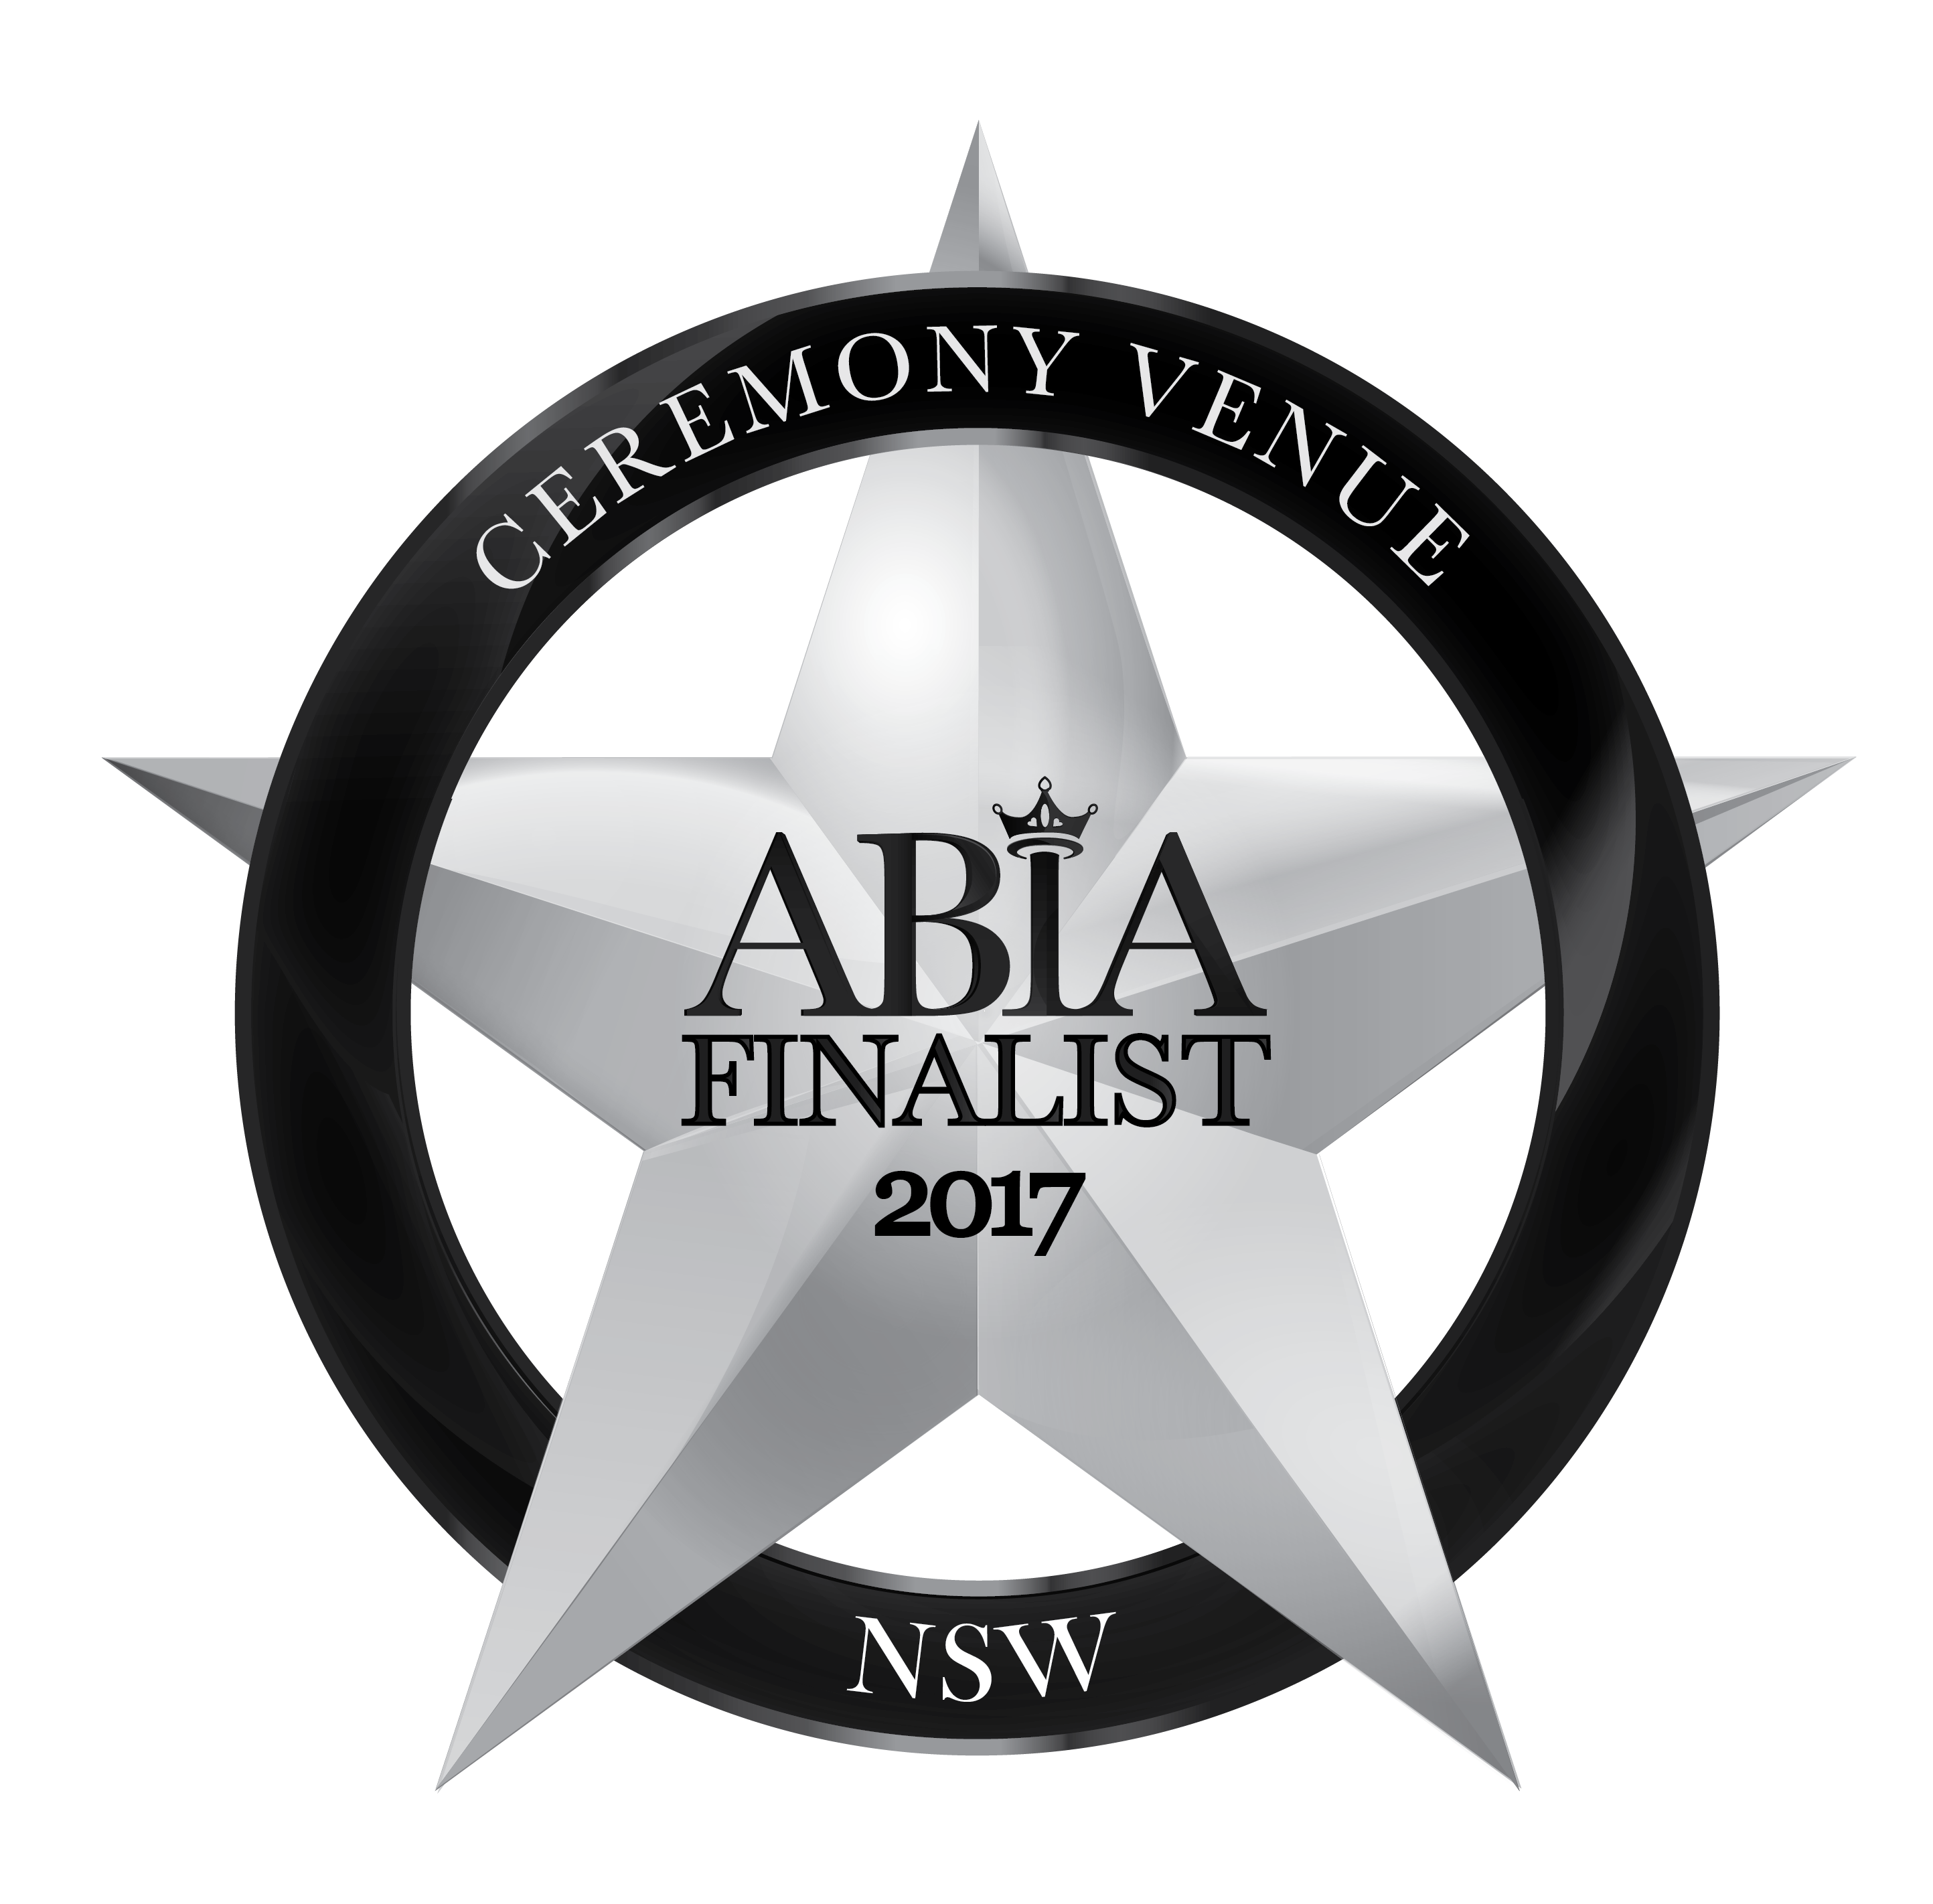 ABIA-Logo-CeremonyVenue-NSW17_FINALIST.png